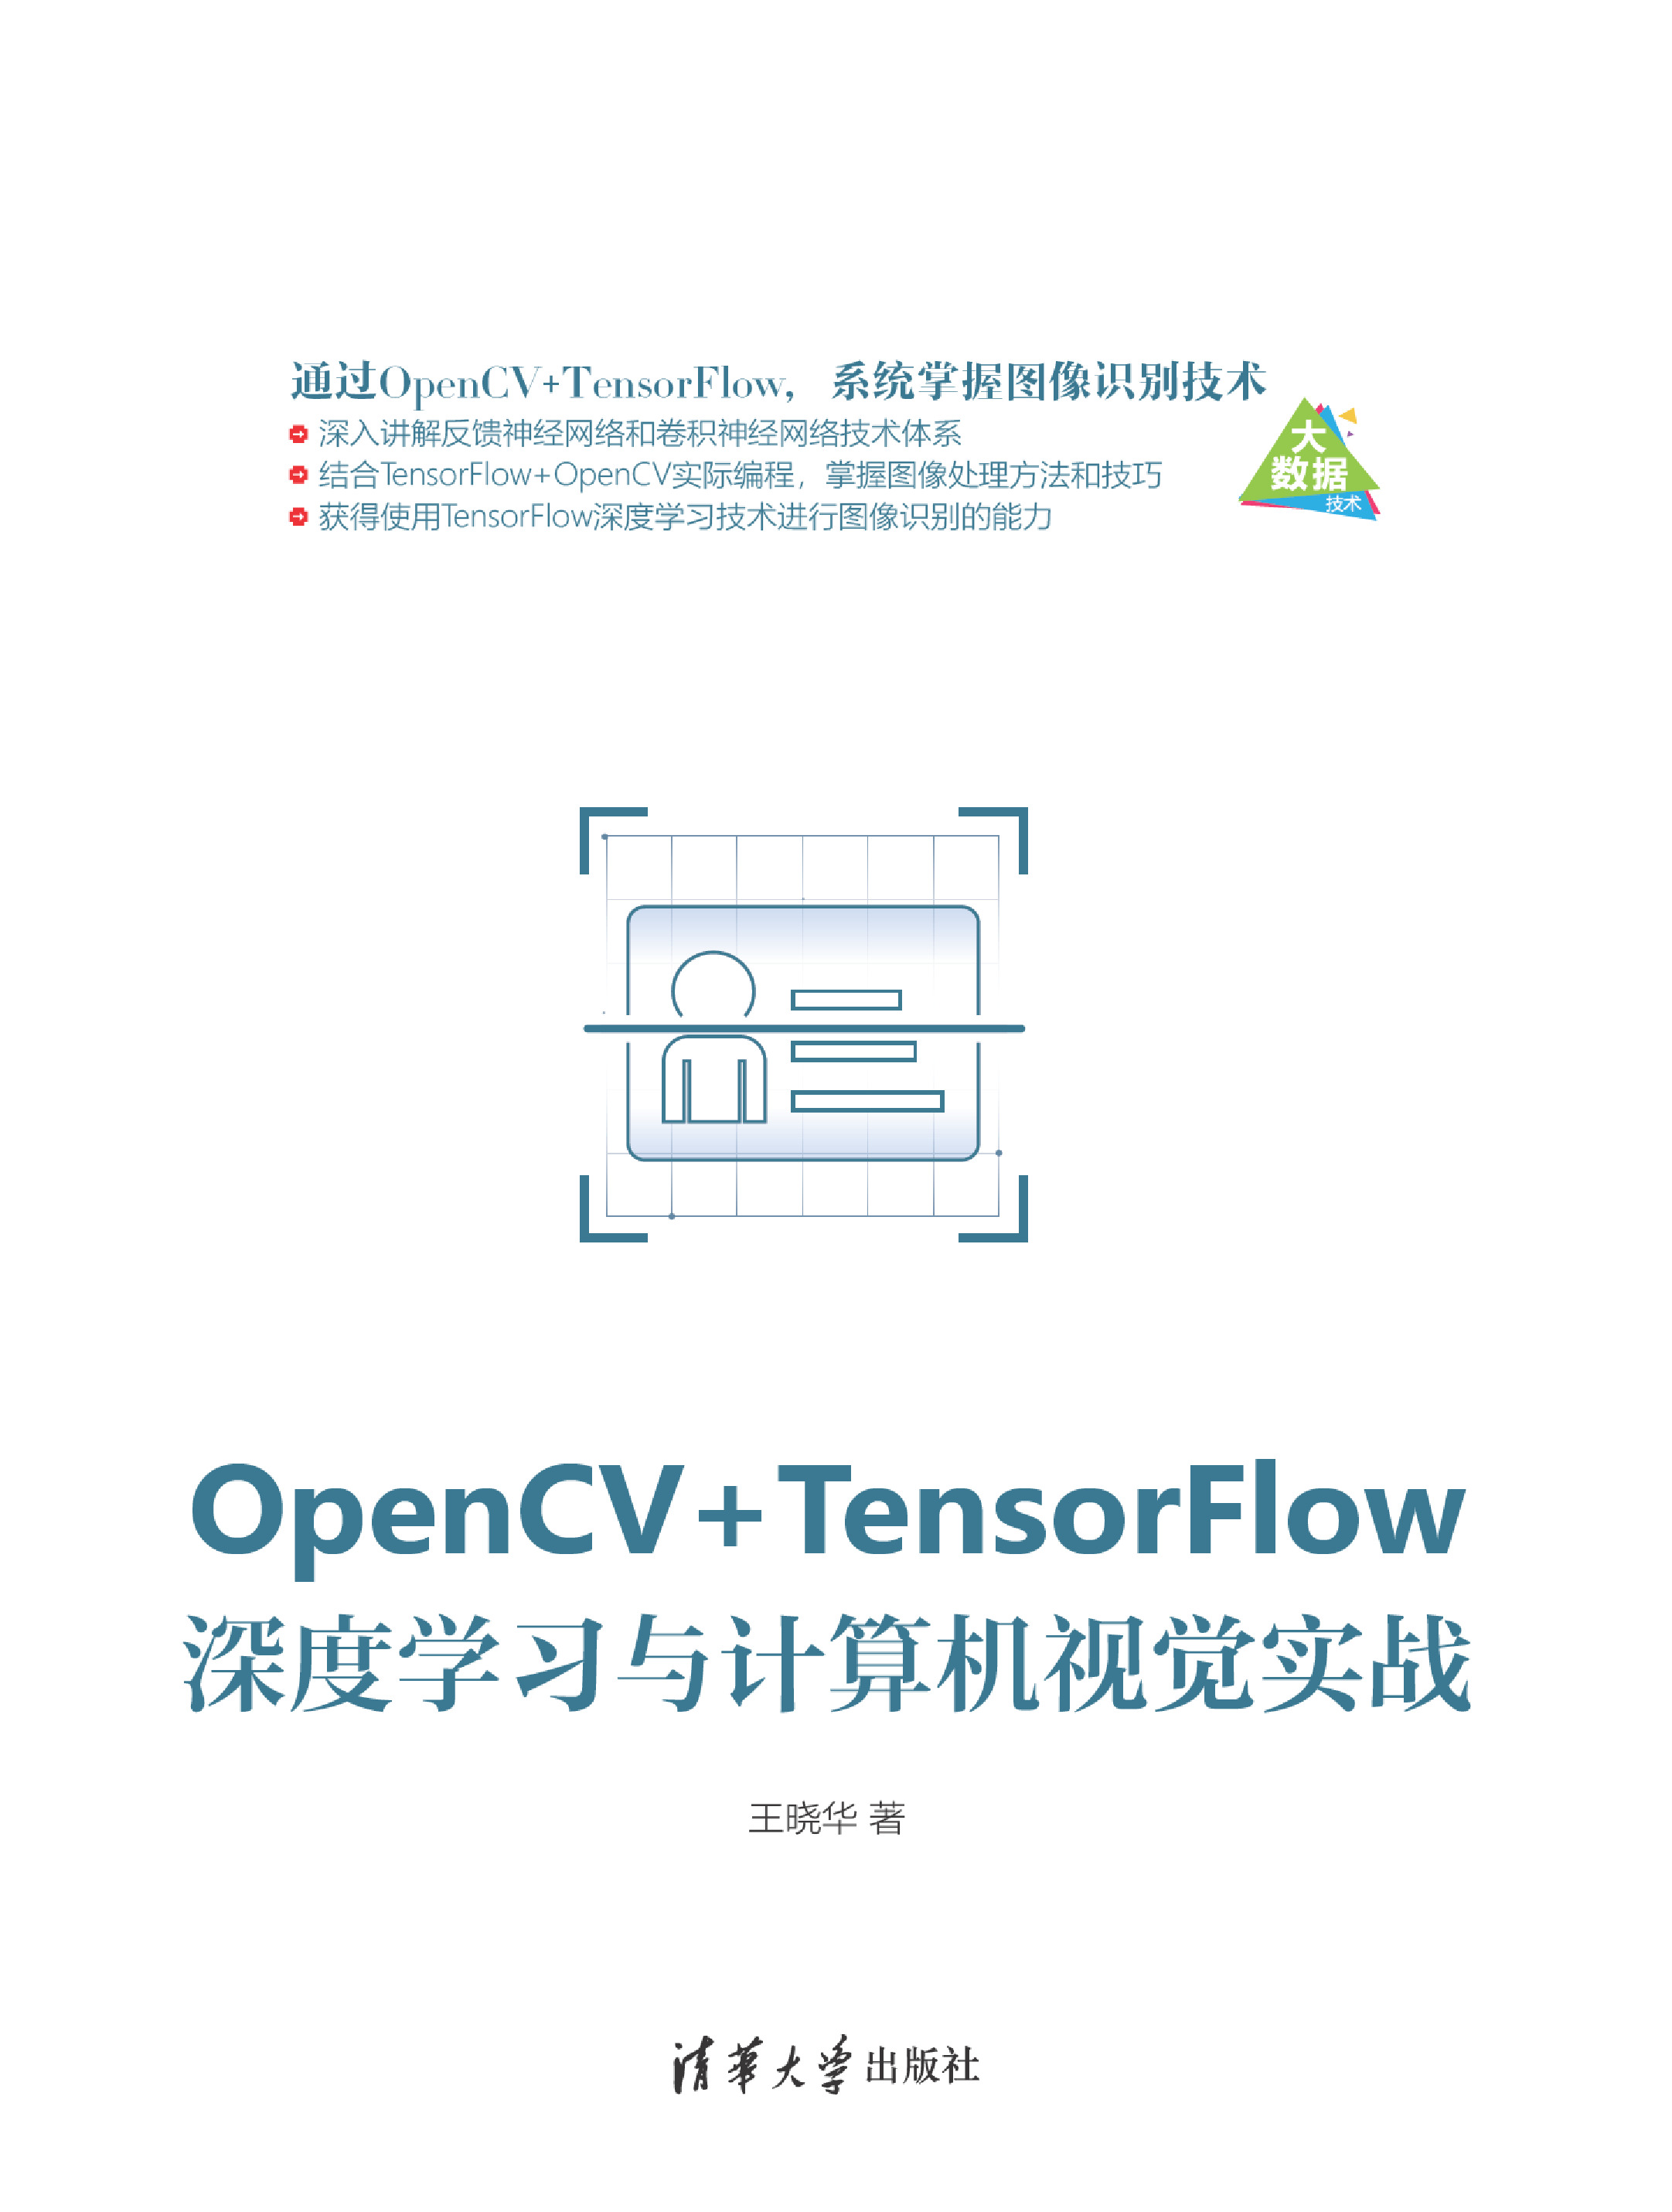 OpenCV TensorFlow深度学习与计算机视觉实战